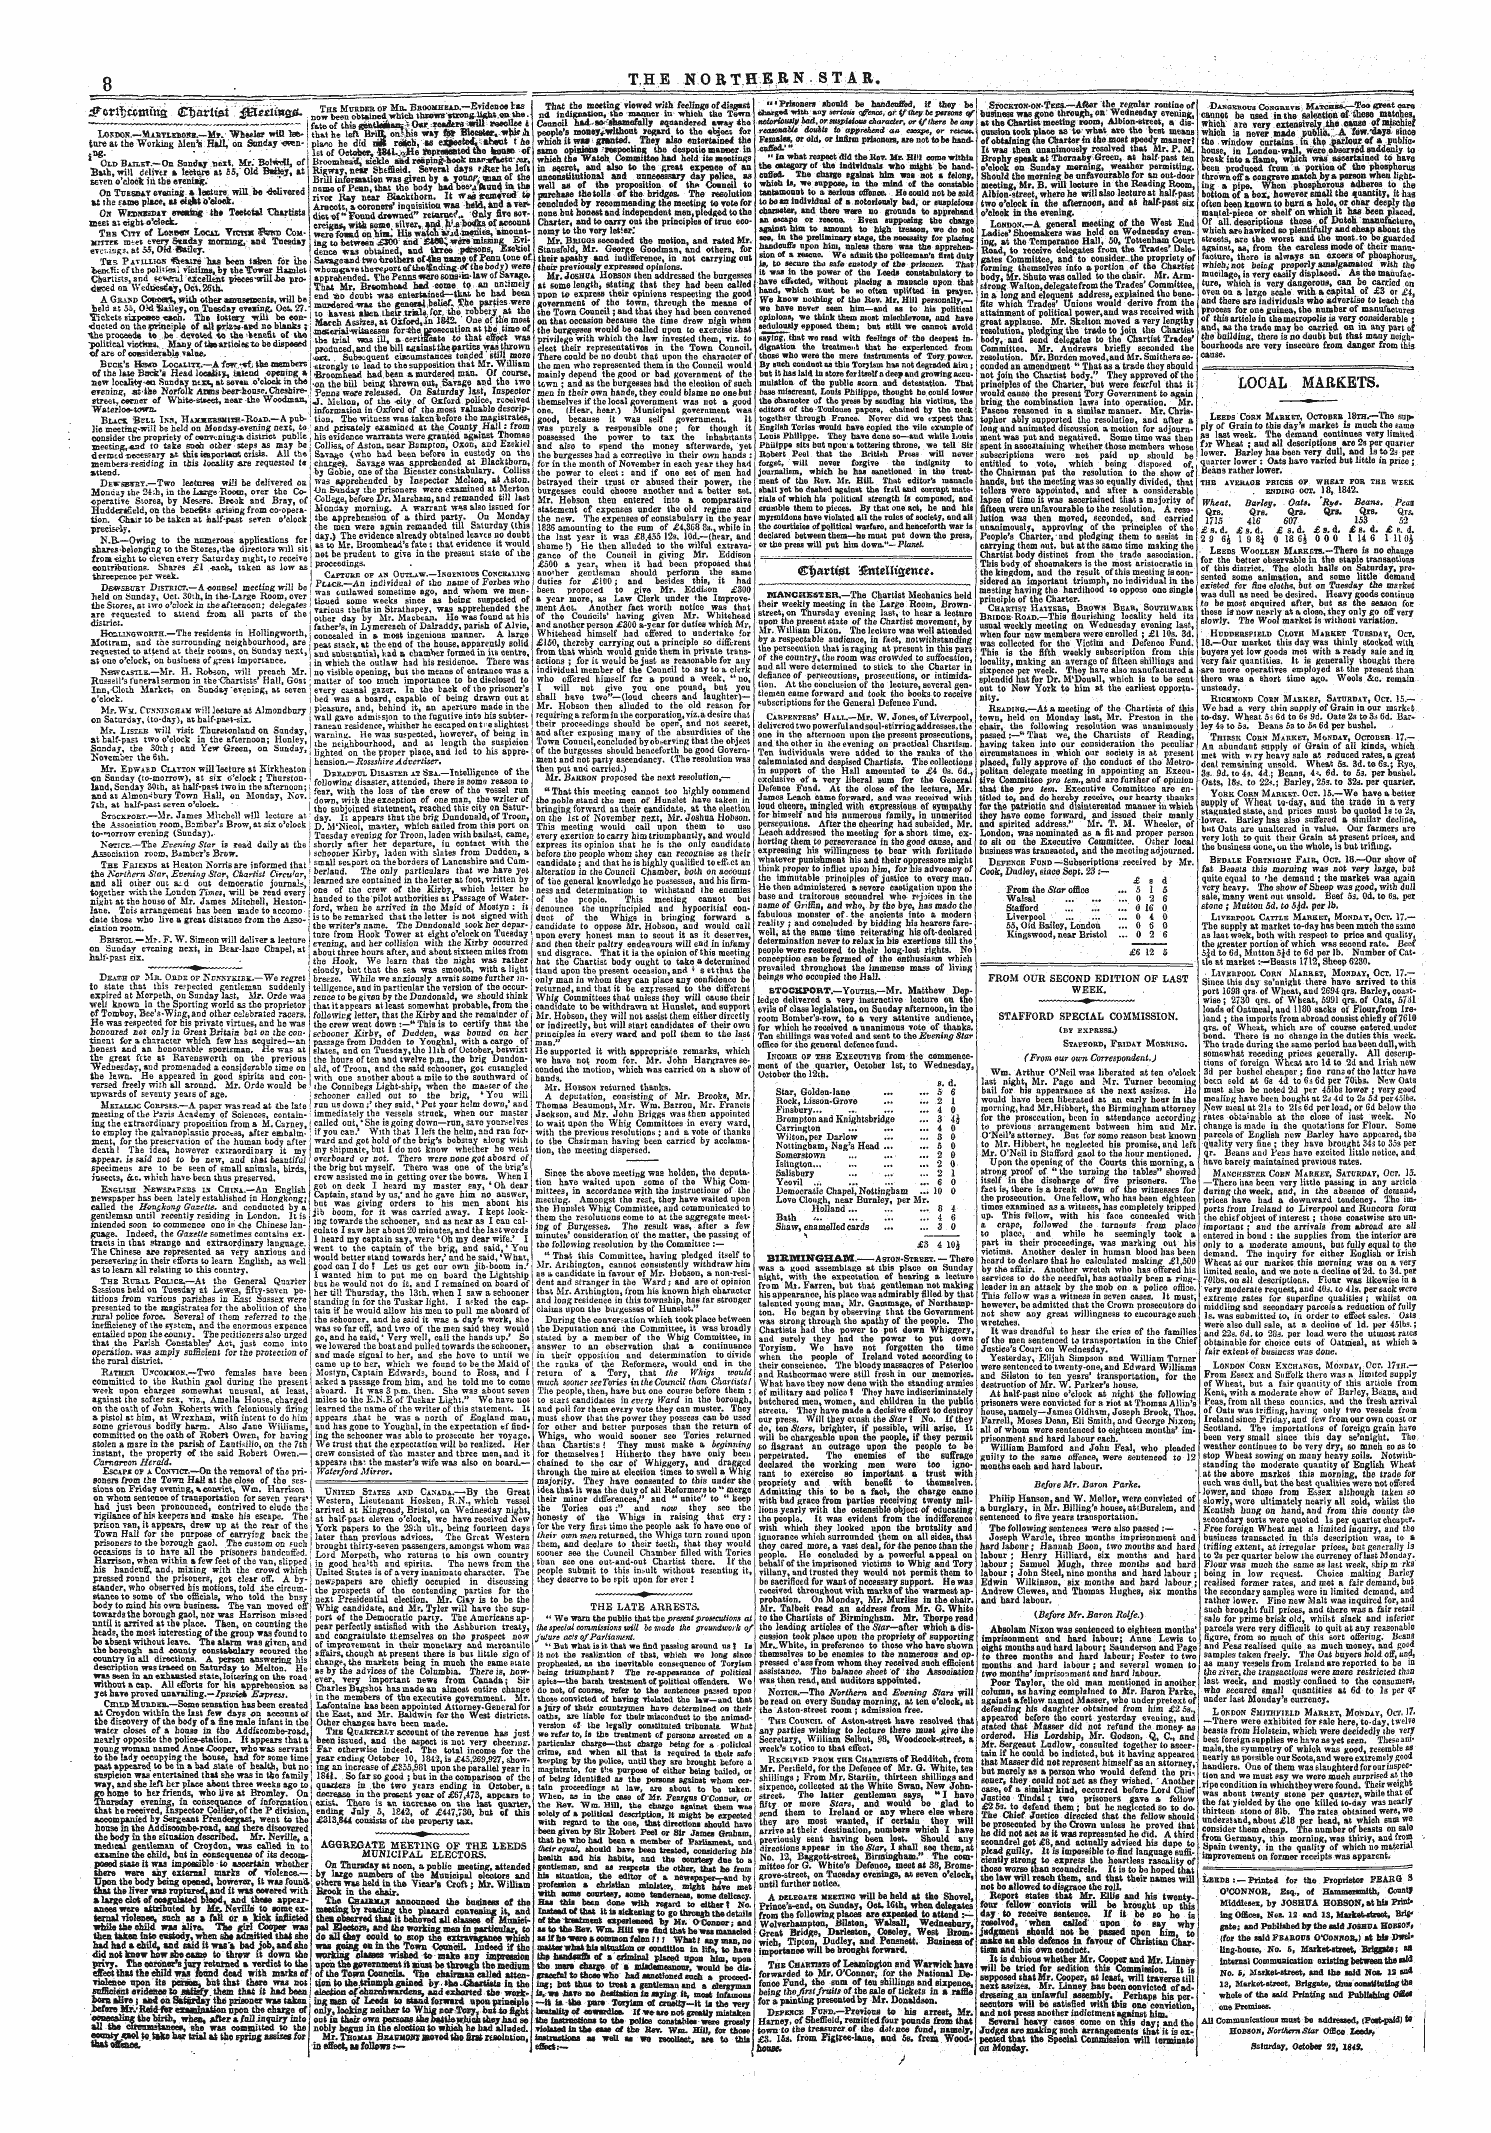 Northern Star (1837-1852): jS F Y, 4th edition: 8